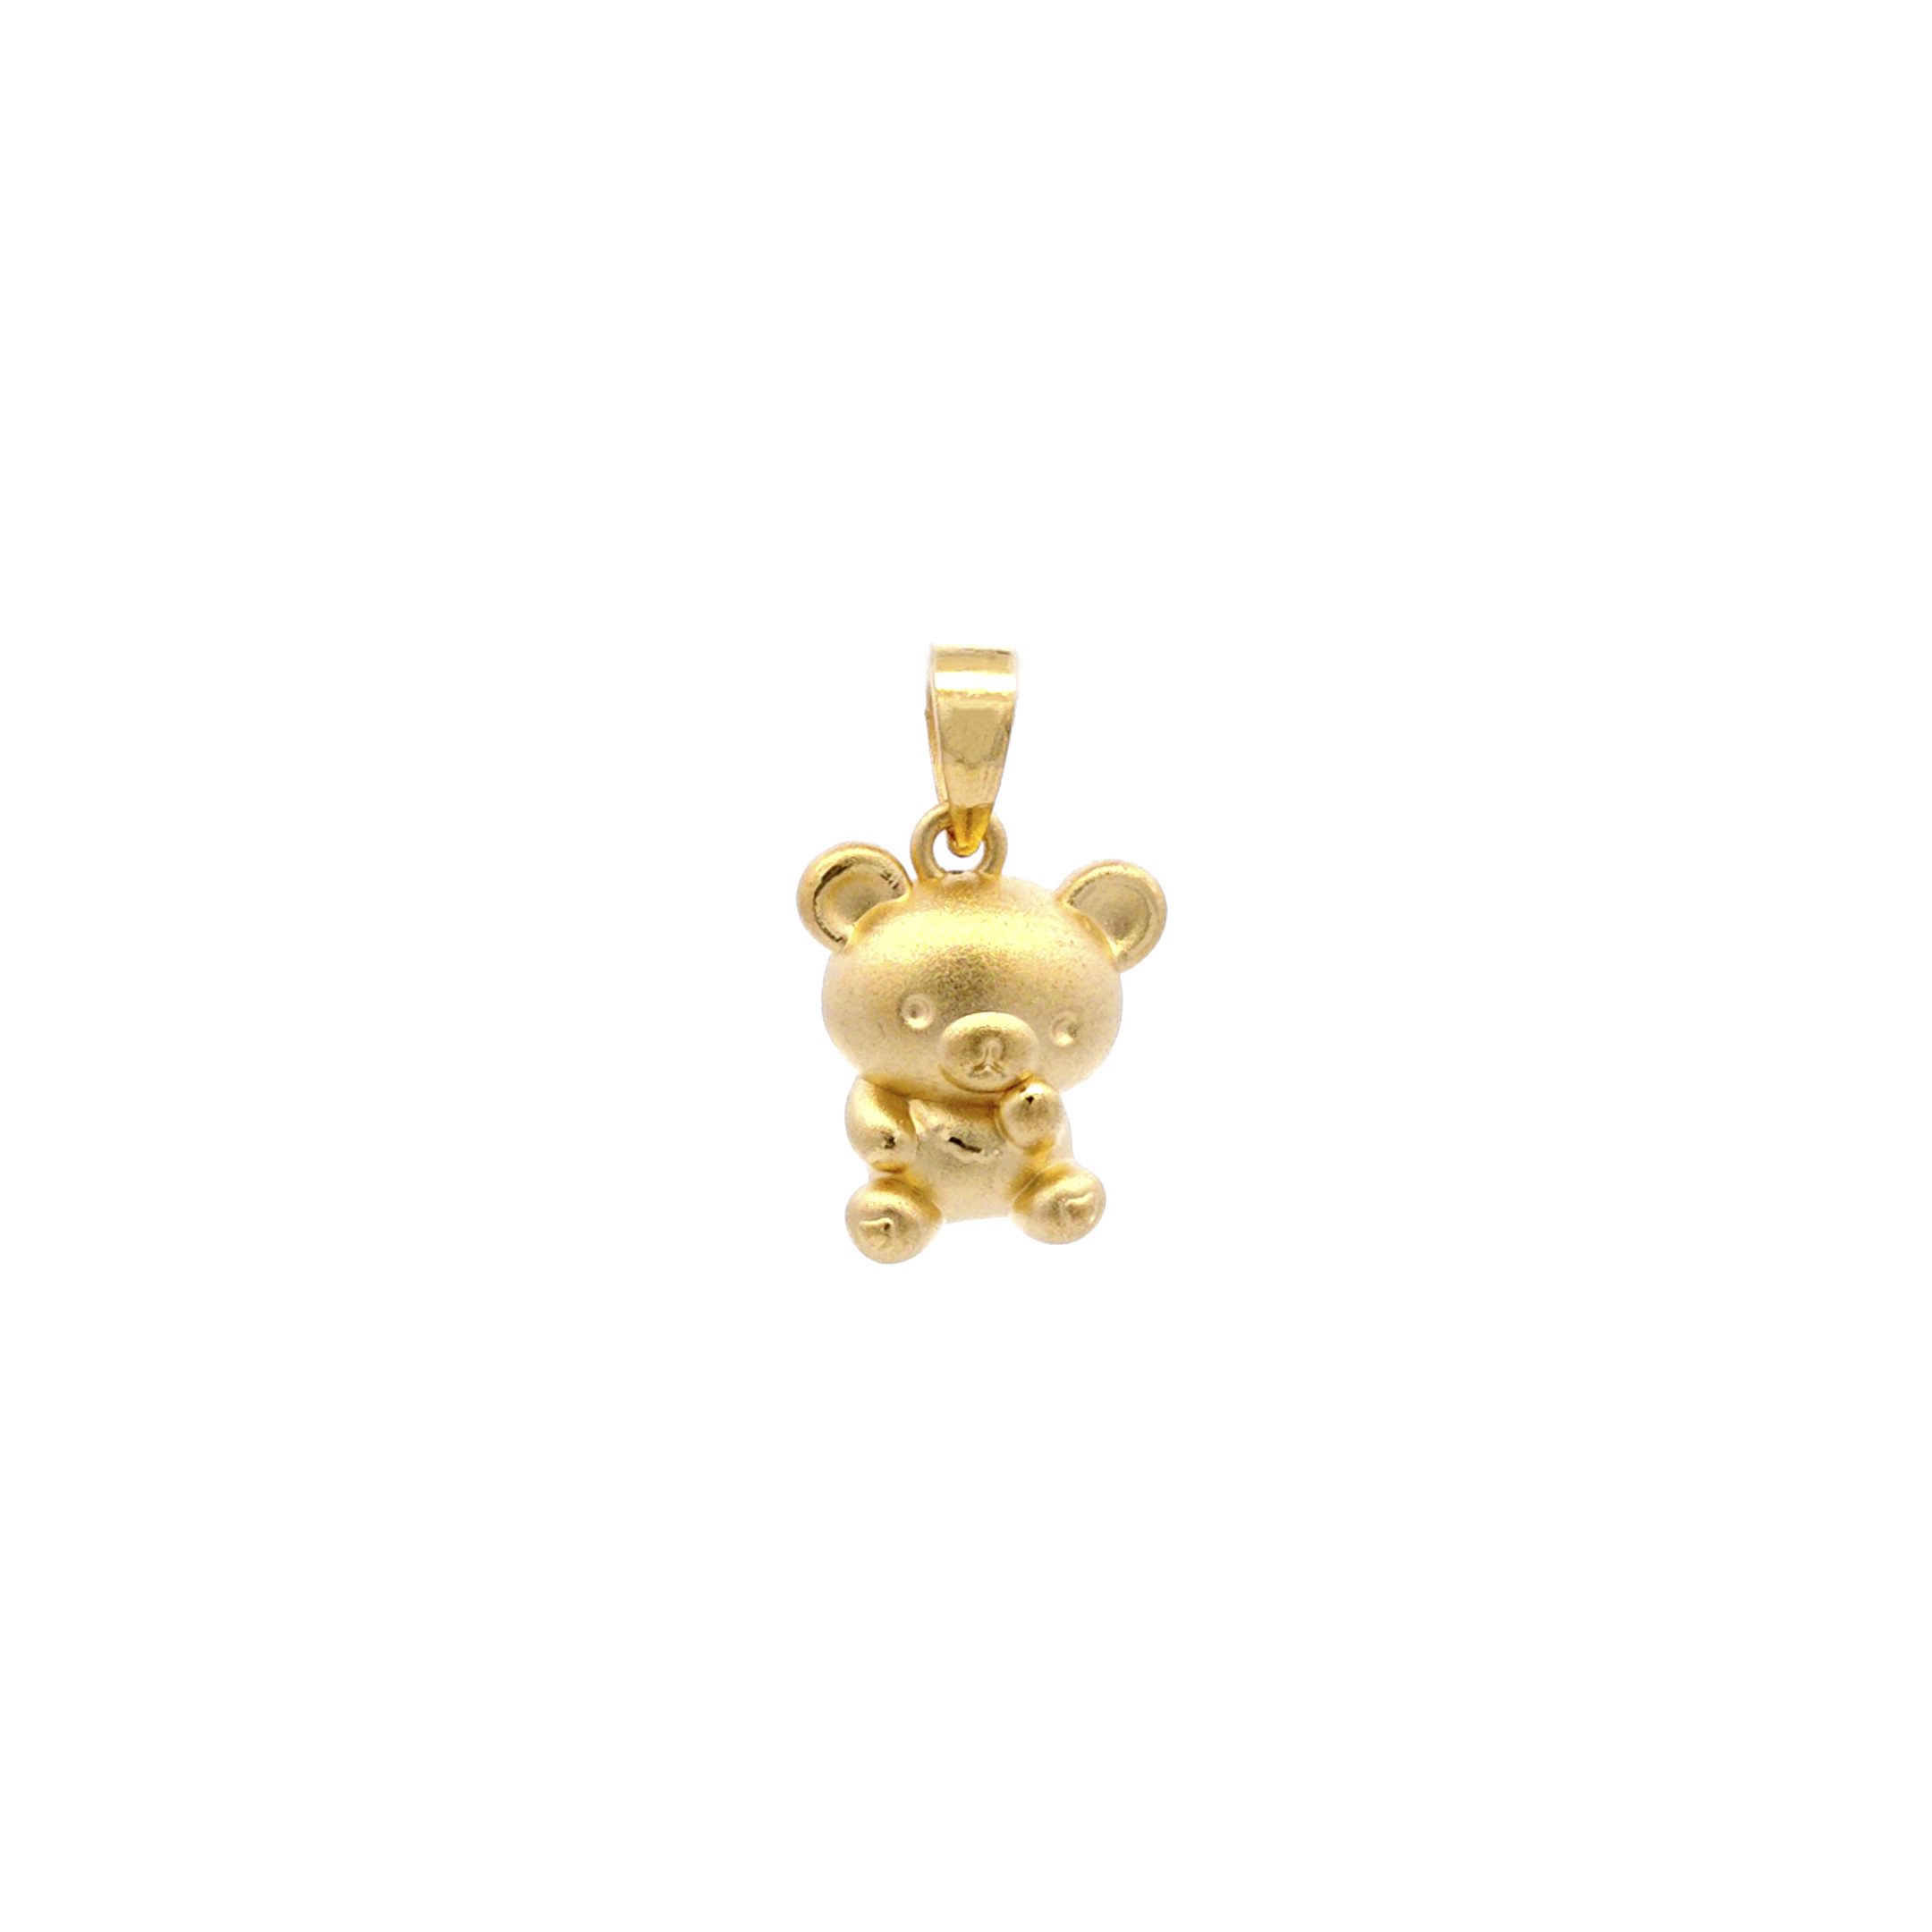 TIANSI 999 (24K) Gold Bear Pendant